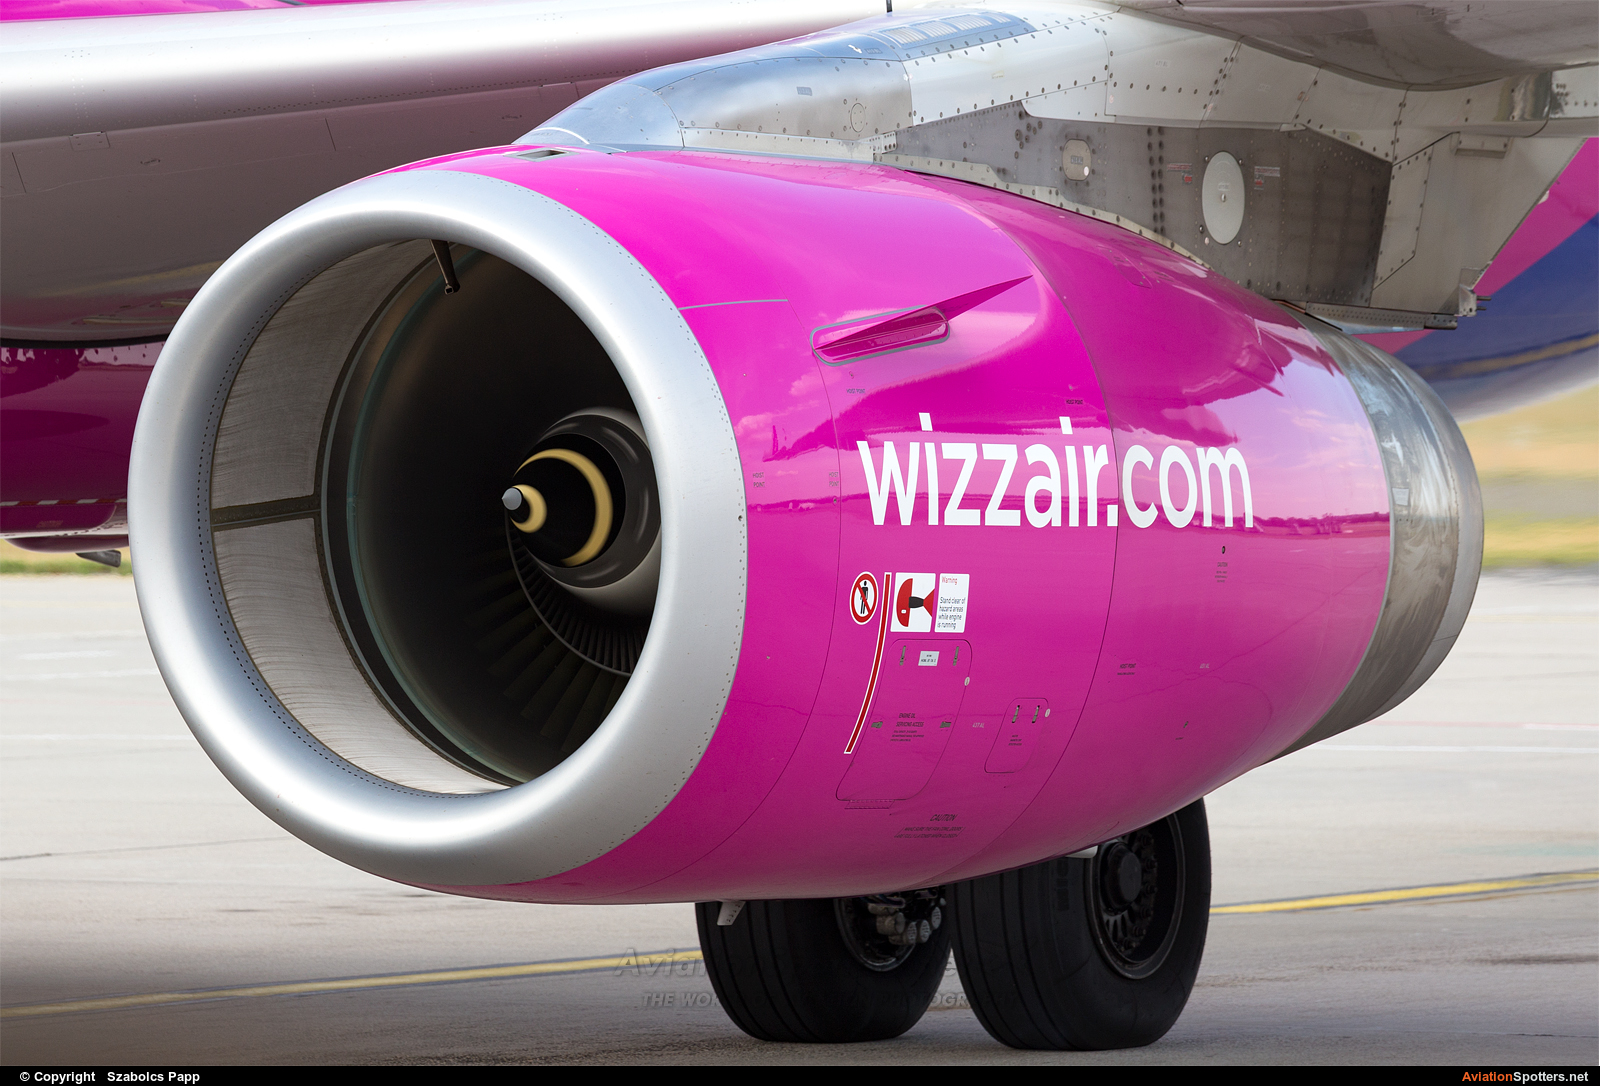 Wizz Air  -  A321-231  (HA-LXD) By Szabolcs Papp (mr.szabi)